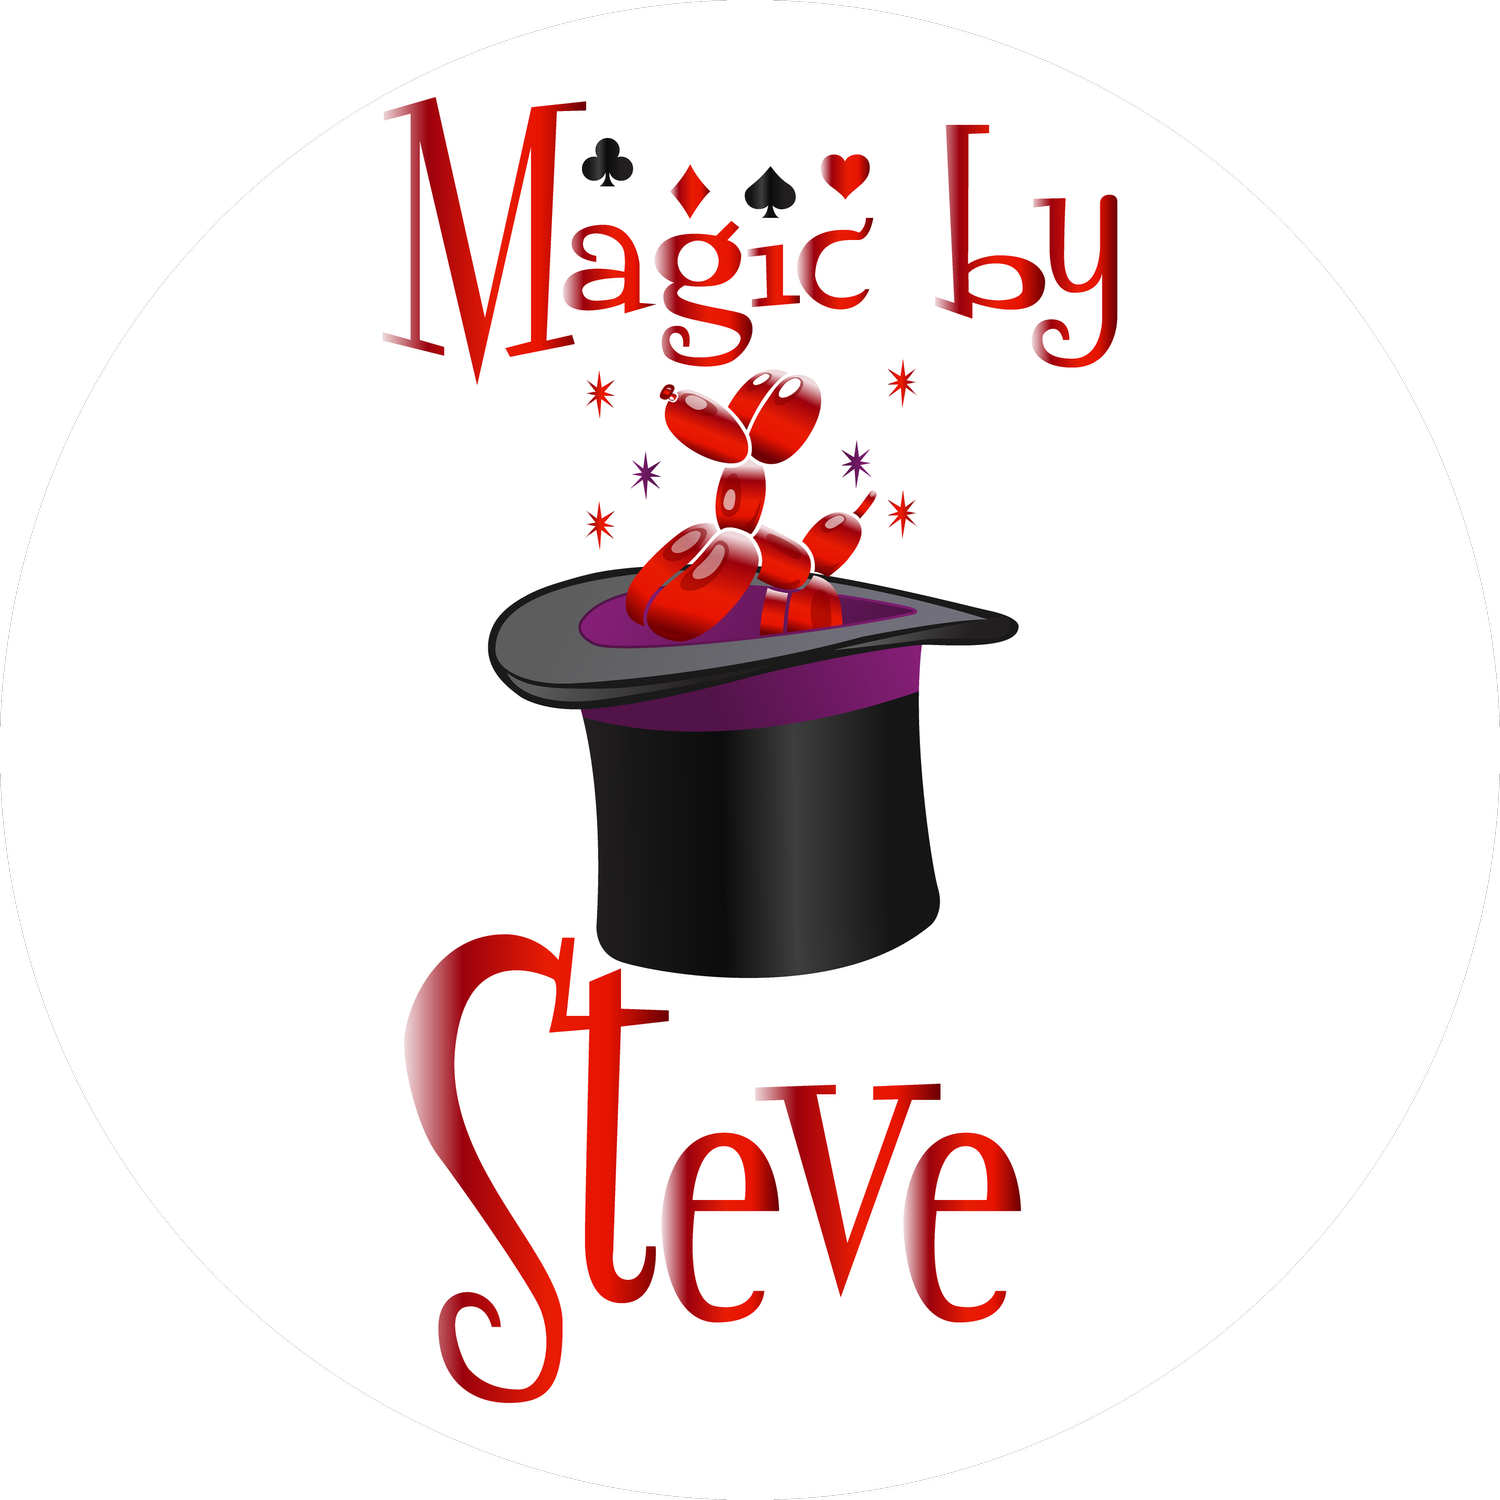 Magic by Steve